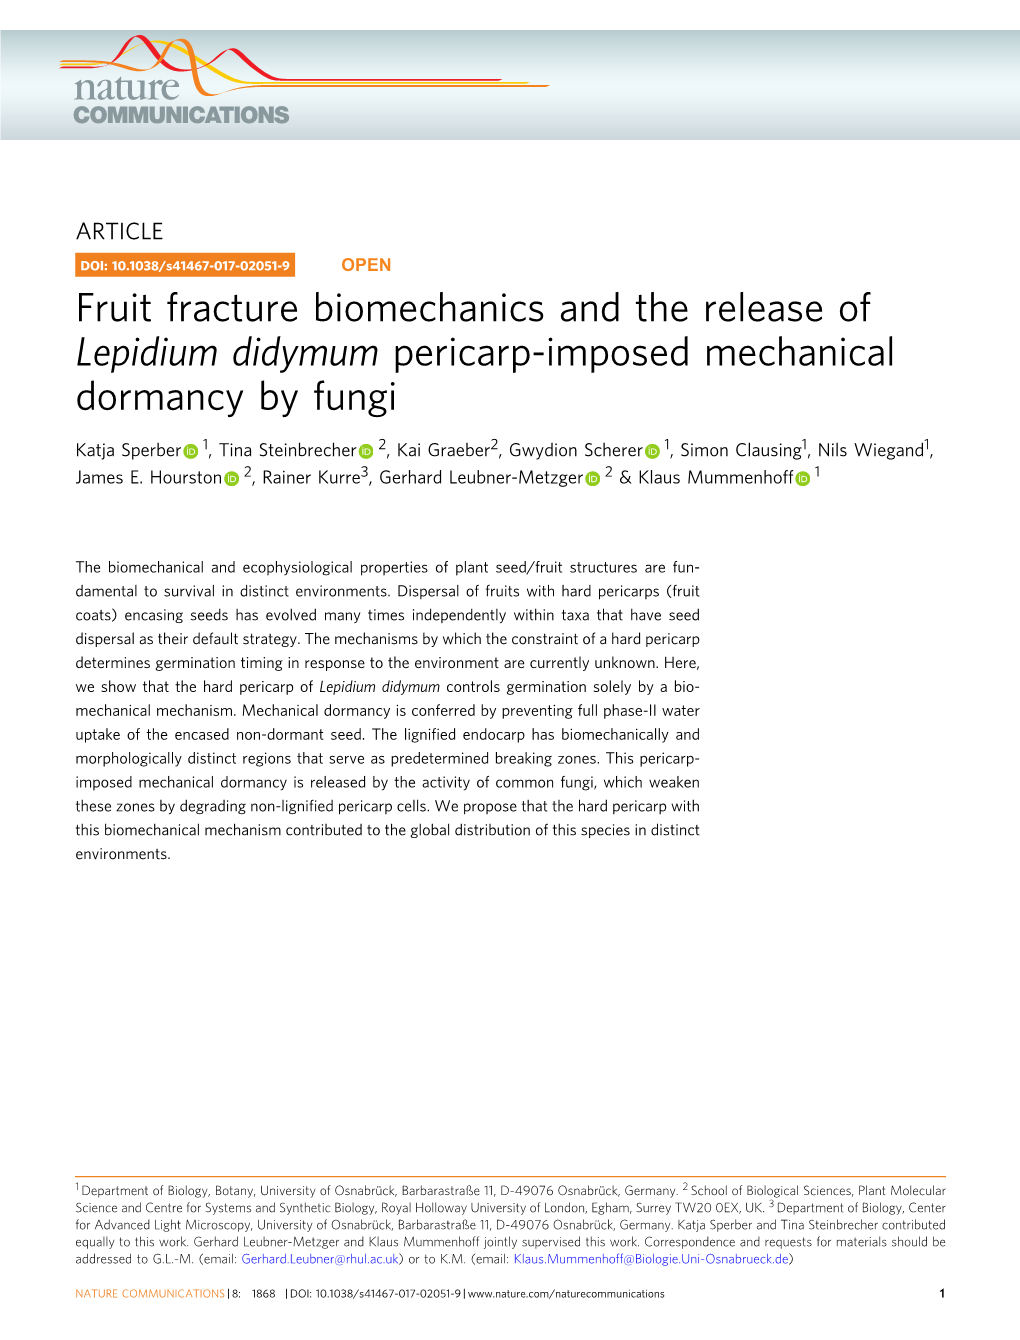 Fruit Fracture Biomechanics and the Release of Lepidium Didymum Pericarp-Imposed Mechanical Dormancy by Fungi